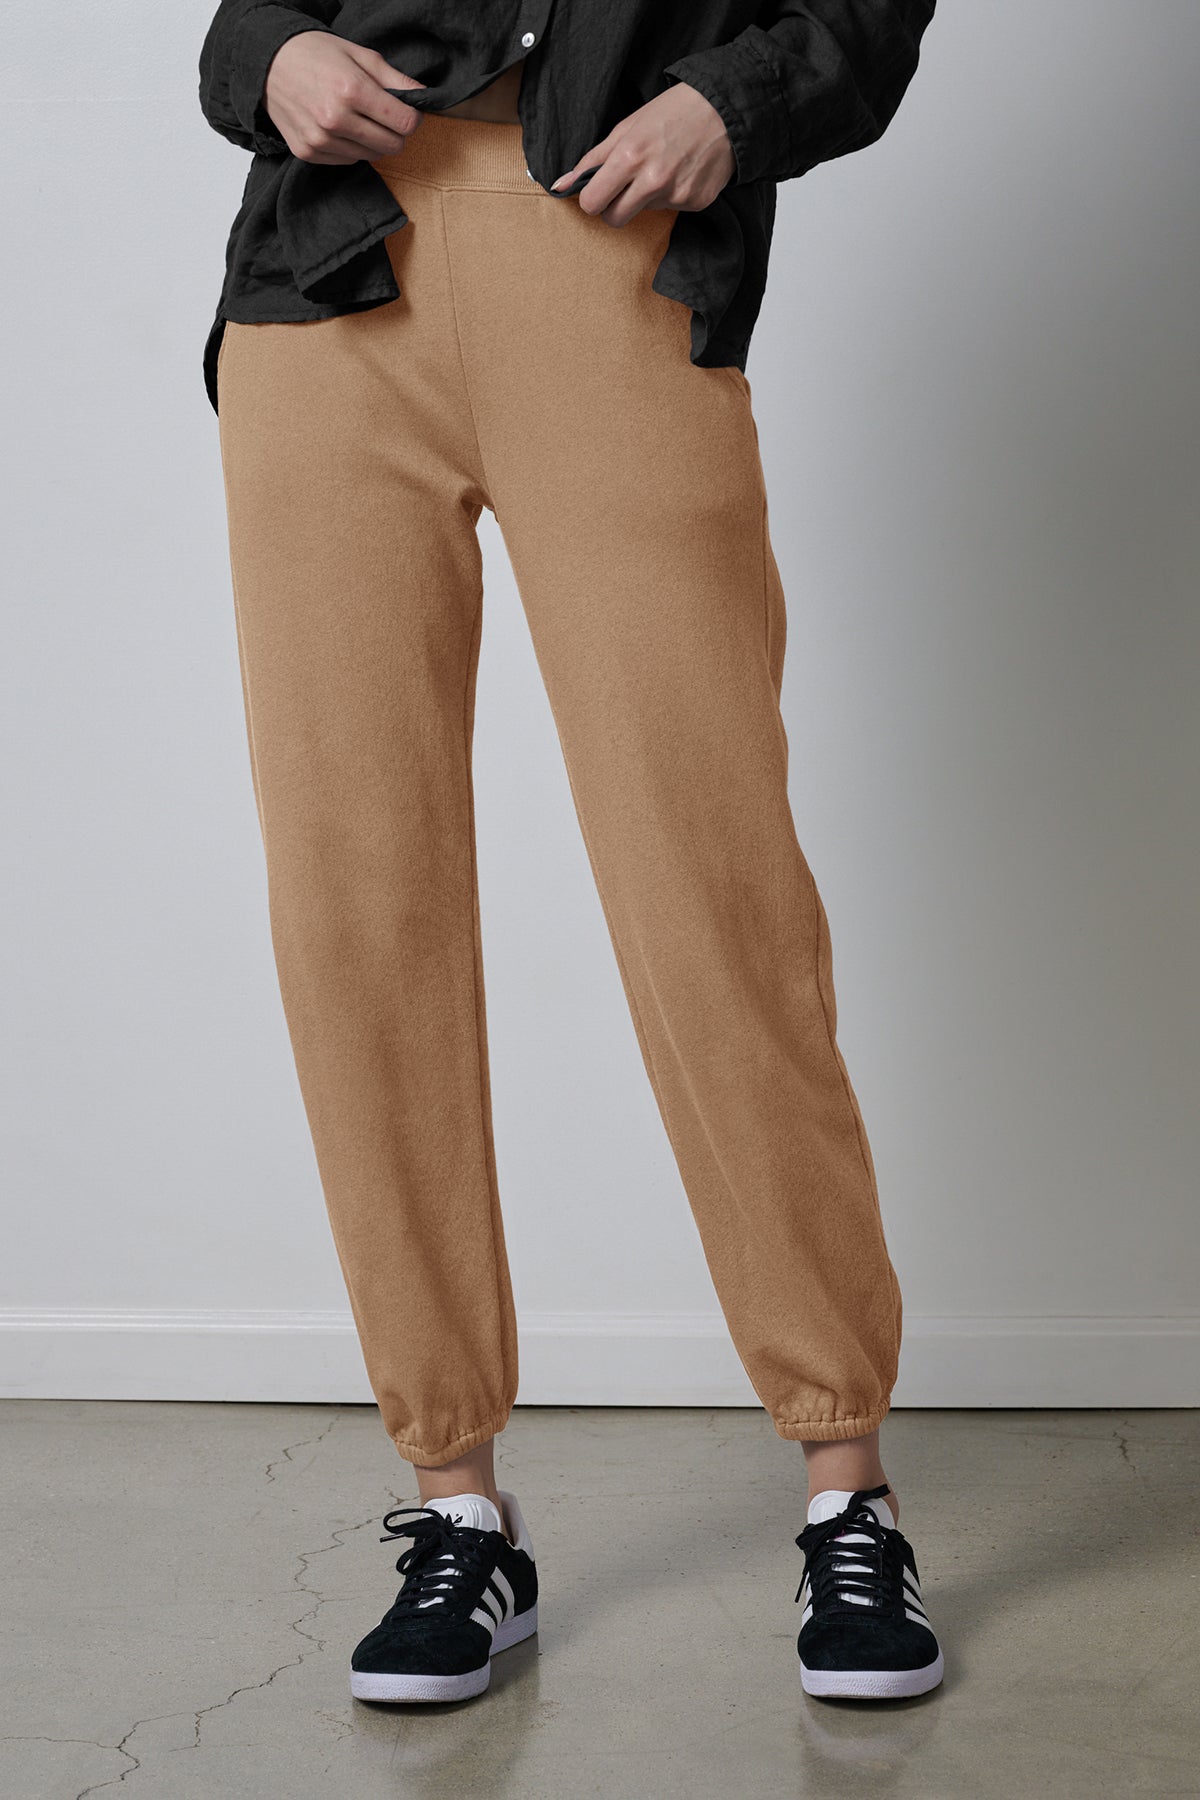 Velvet by Jenny Graham ZUMA SWEATPANT women's jogger pants in camel-35547979677889